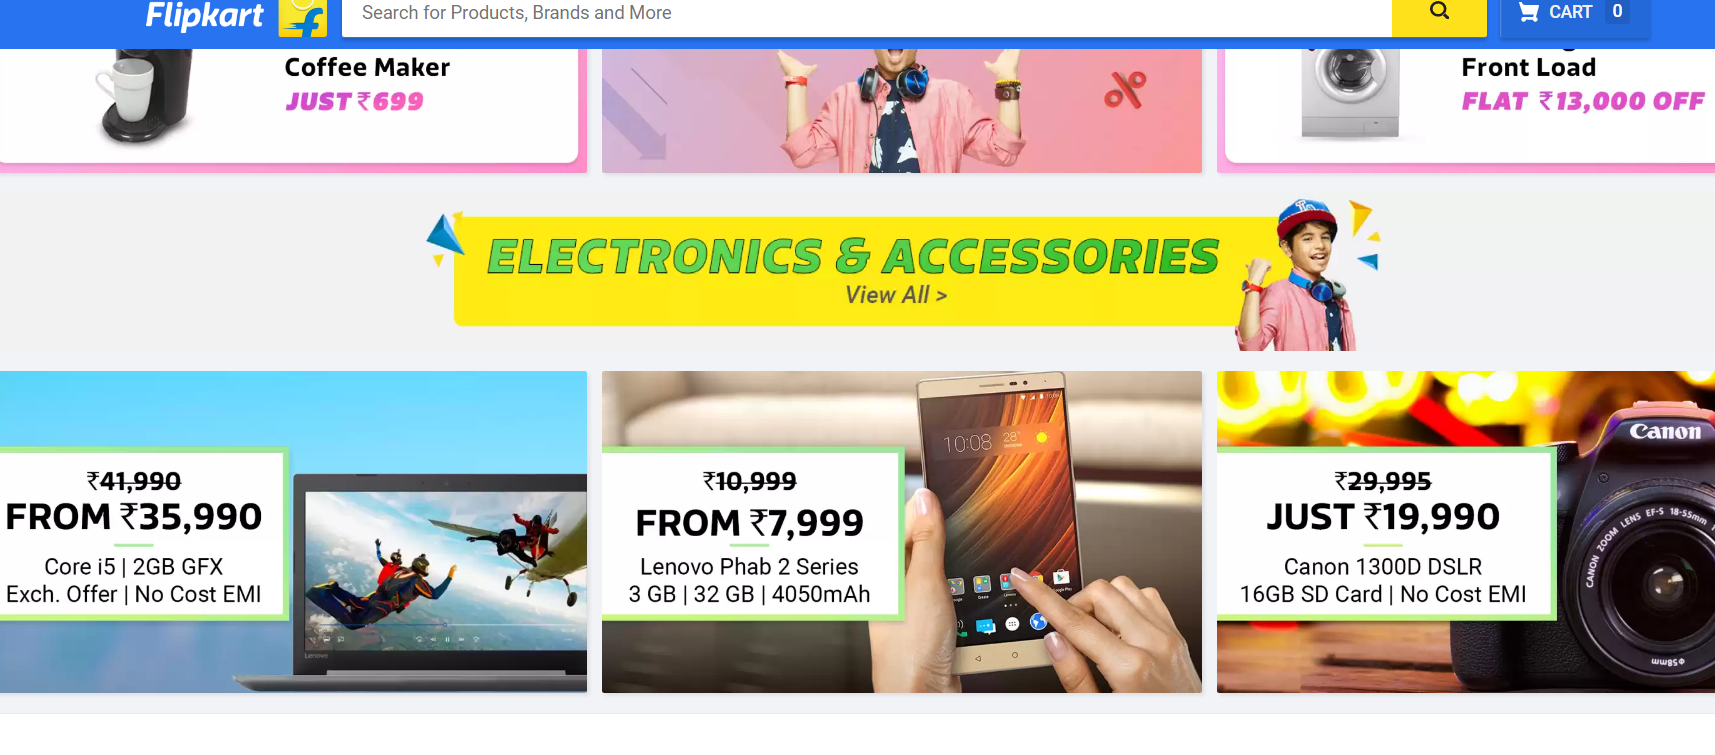 Top Picks from Flipkart Big Billion Days Sale; Big discounts for mobile phones, laptops and cameras 6